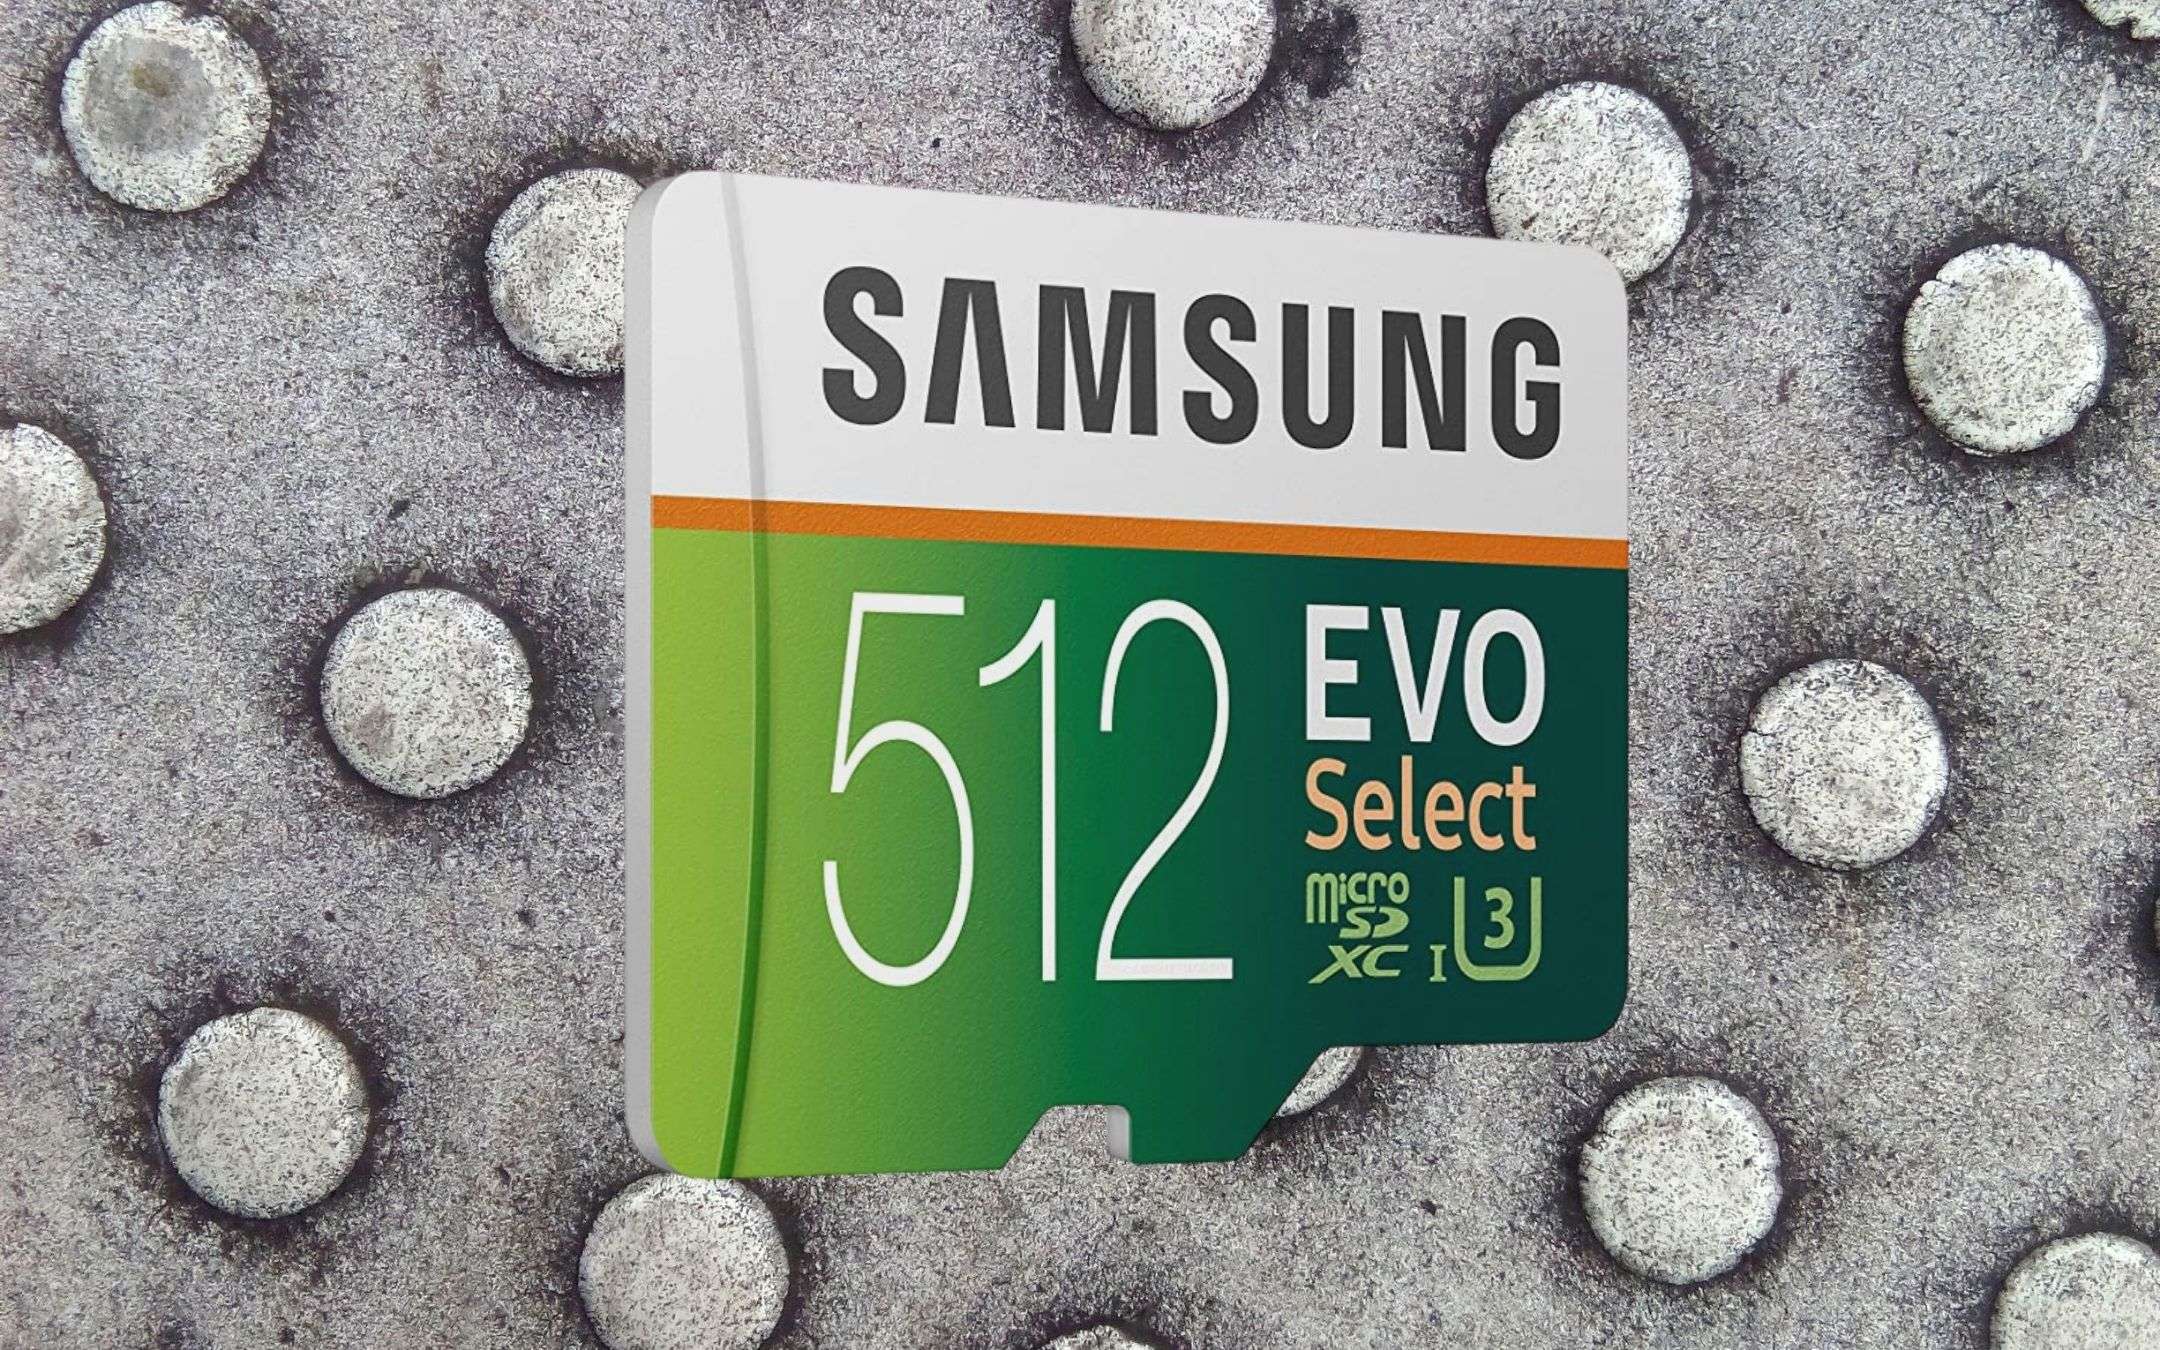 Samsung microSD Evo Select: business on Amazon